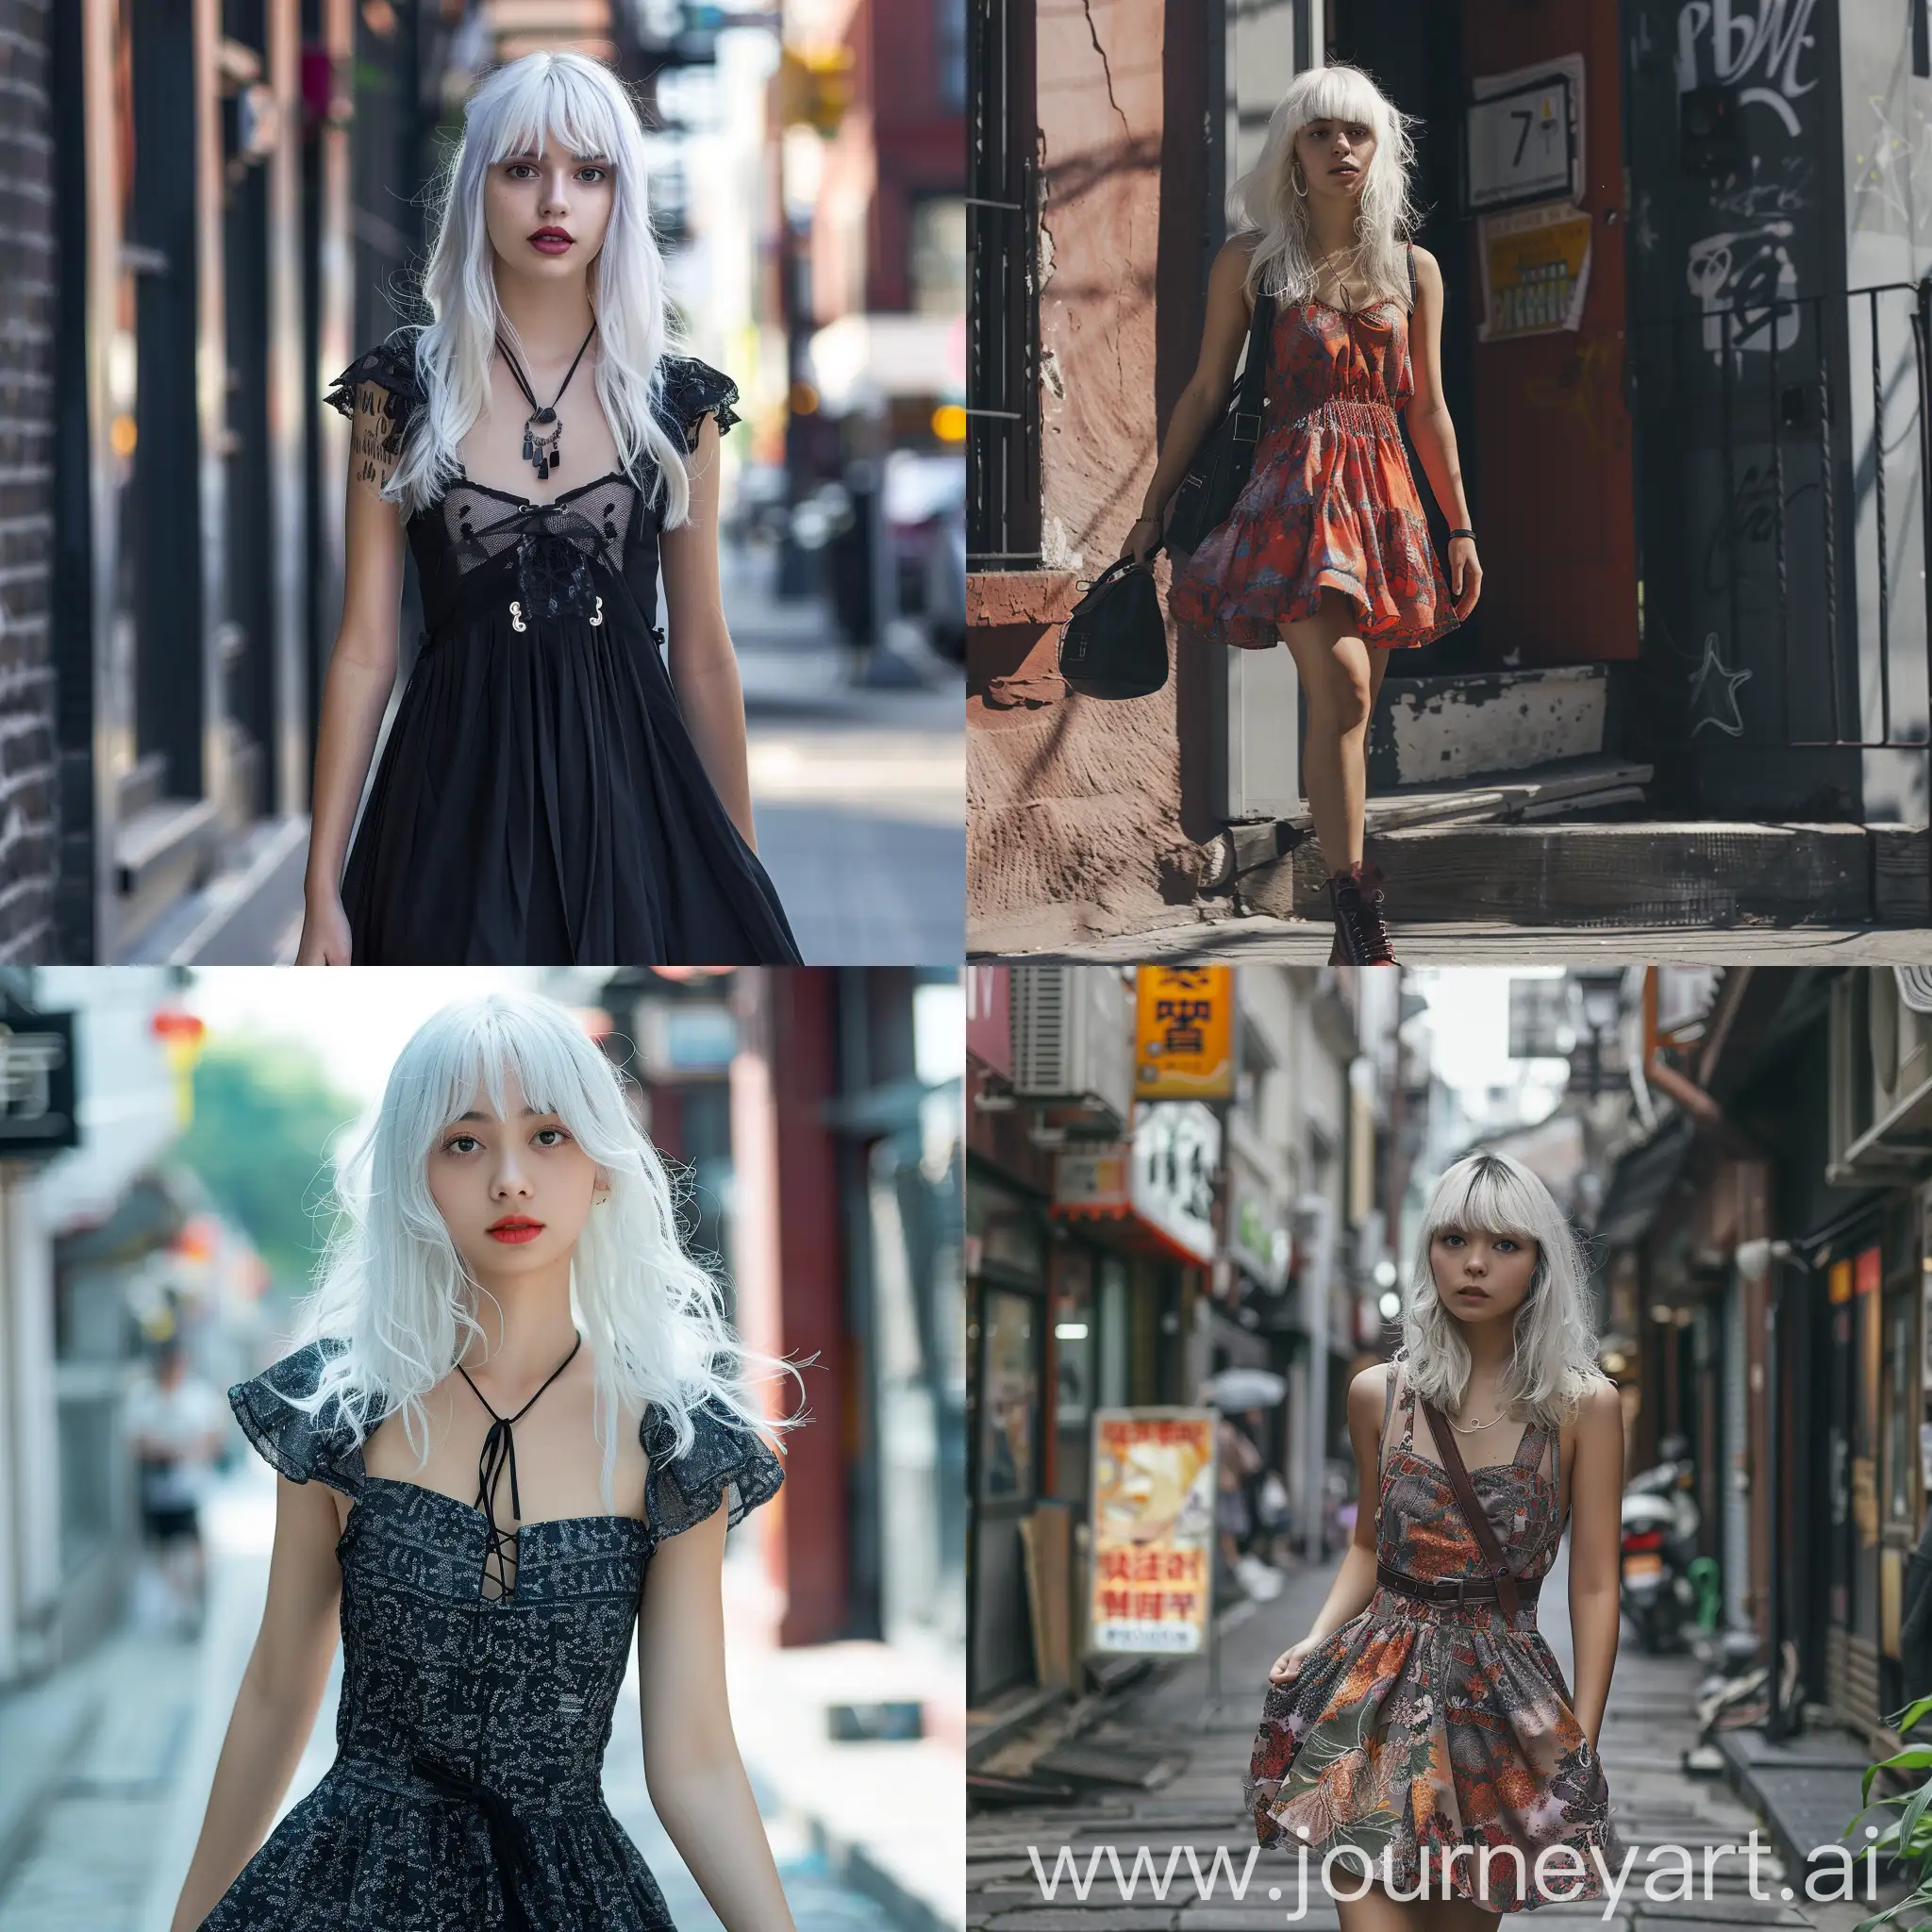 Beautiful girl walk street with dress, white hair bangs,